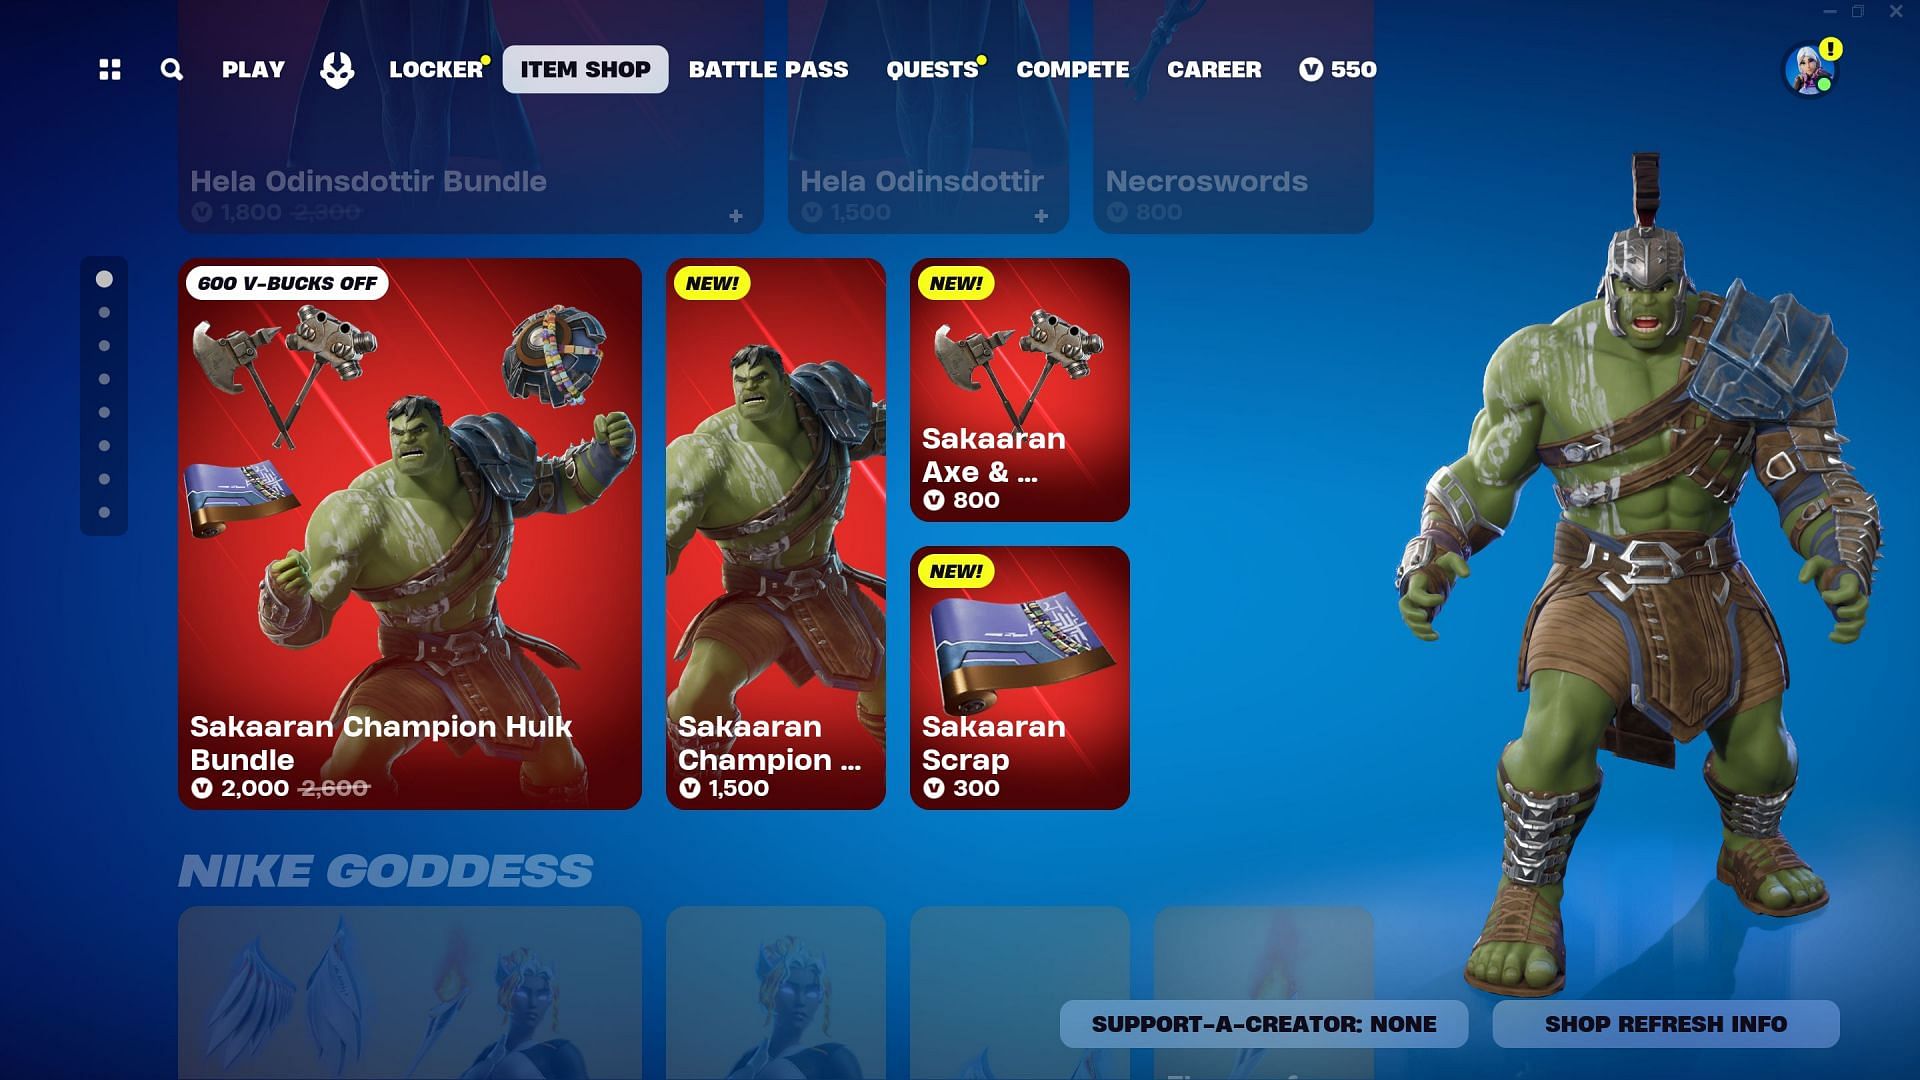 Sakaaran Champion Hulk skin is currently listed in the Item Shop (Image via Epic Games/Fortnite)